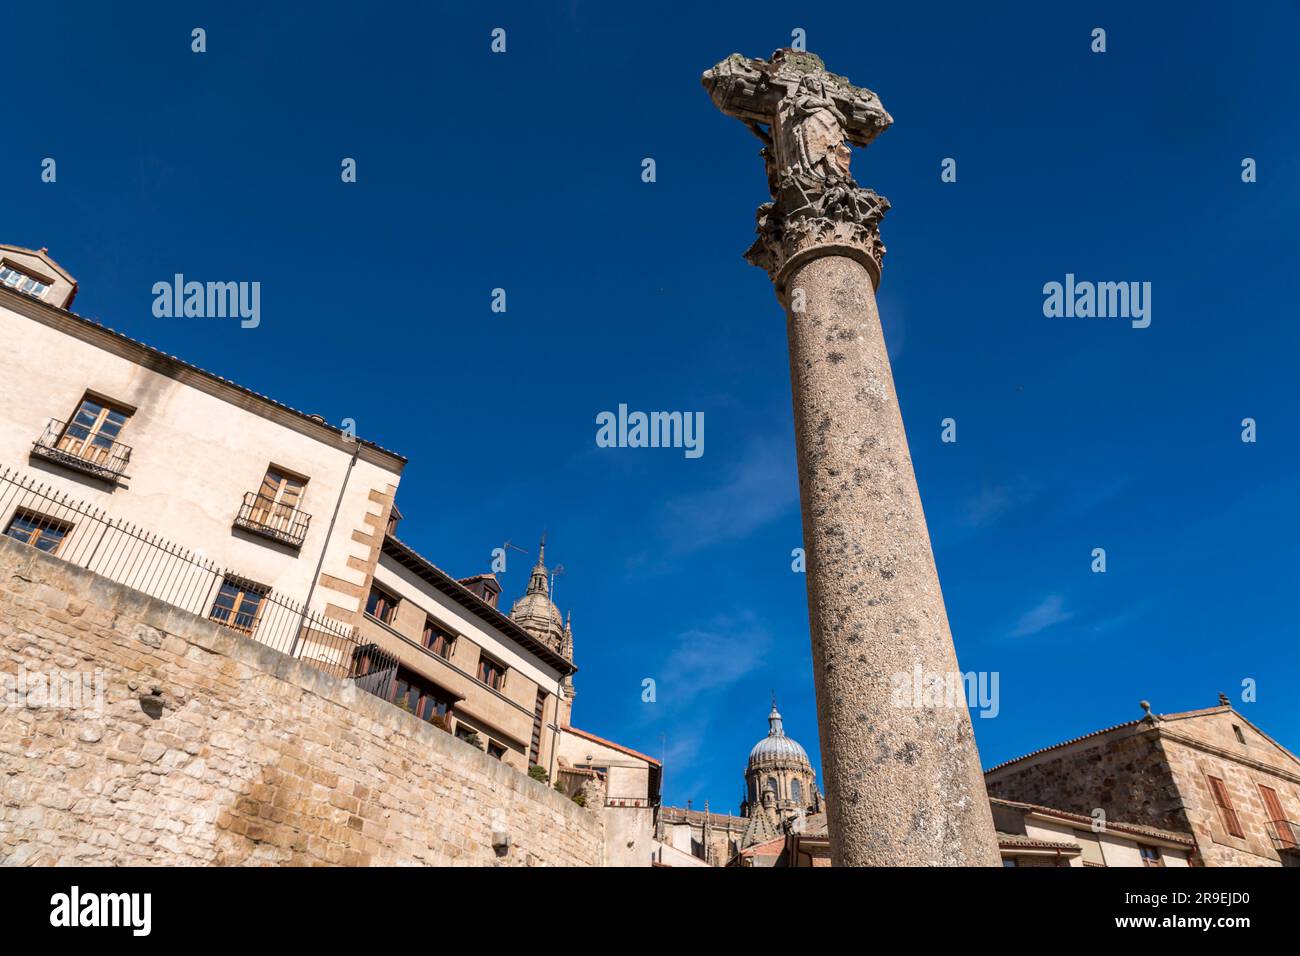 Jesus Christ on cross stone monument in Salamanca, Castile and Leon, Spain. Stock Photo